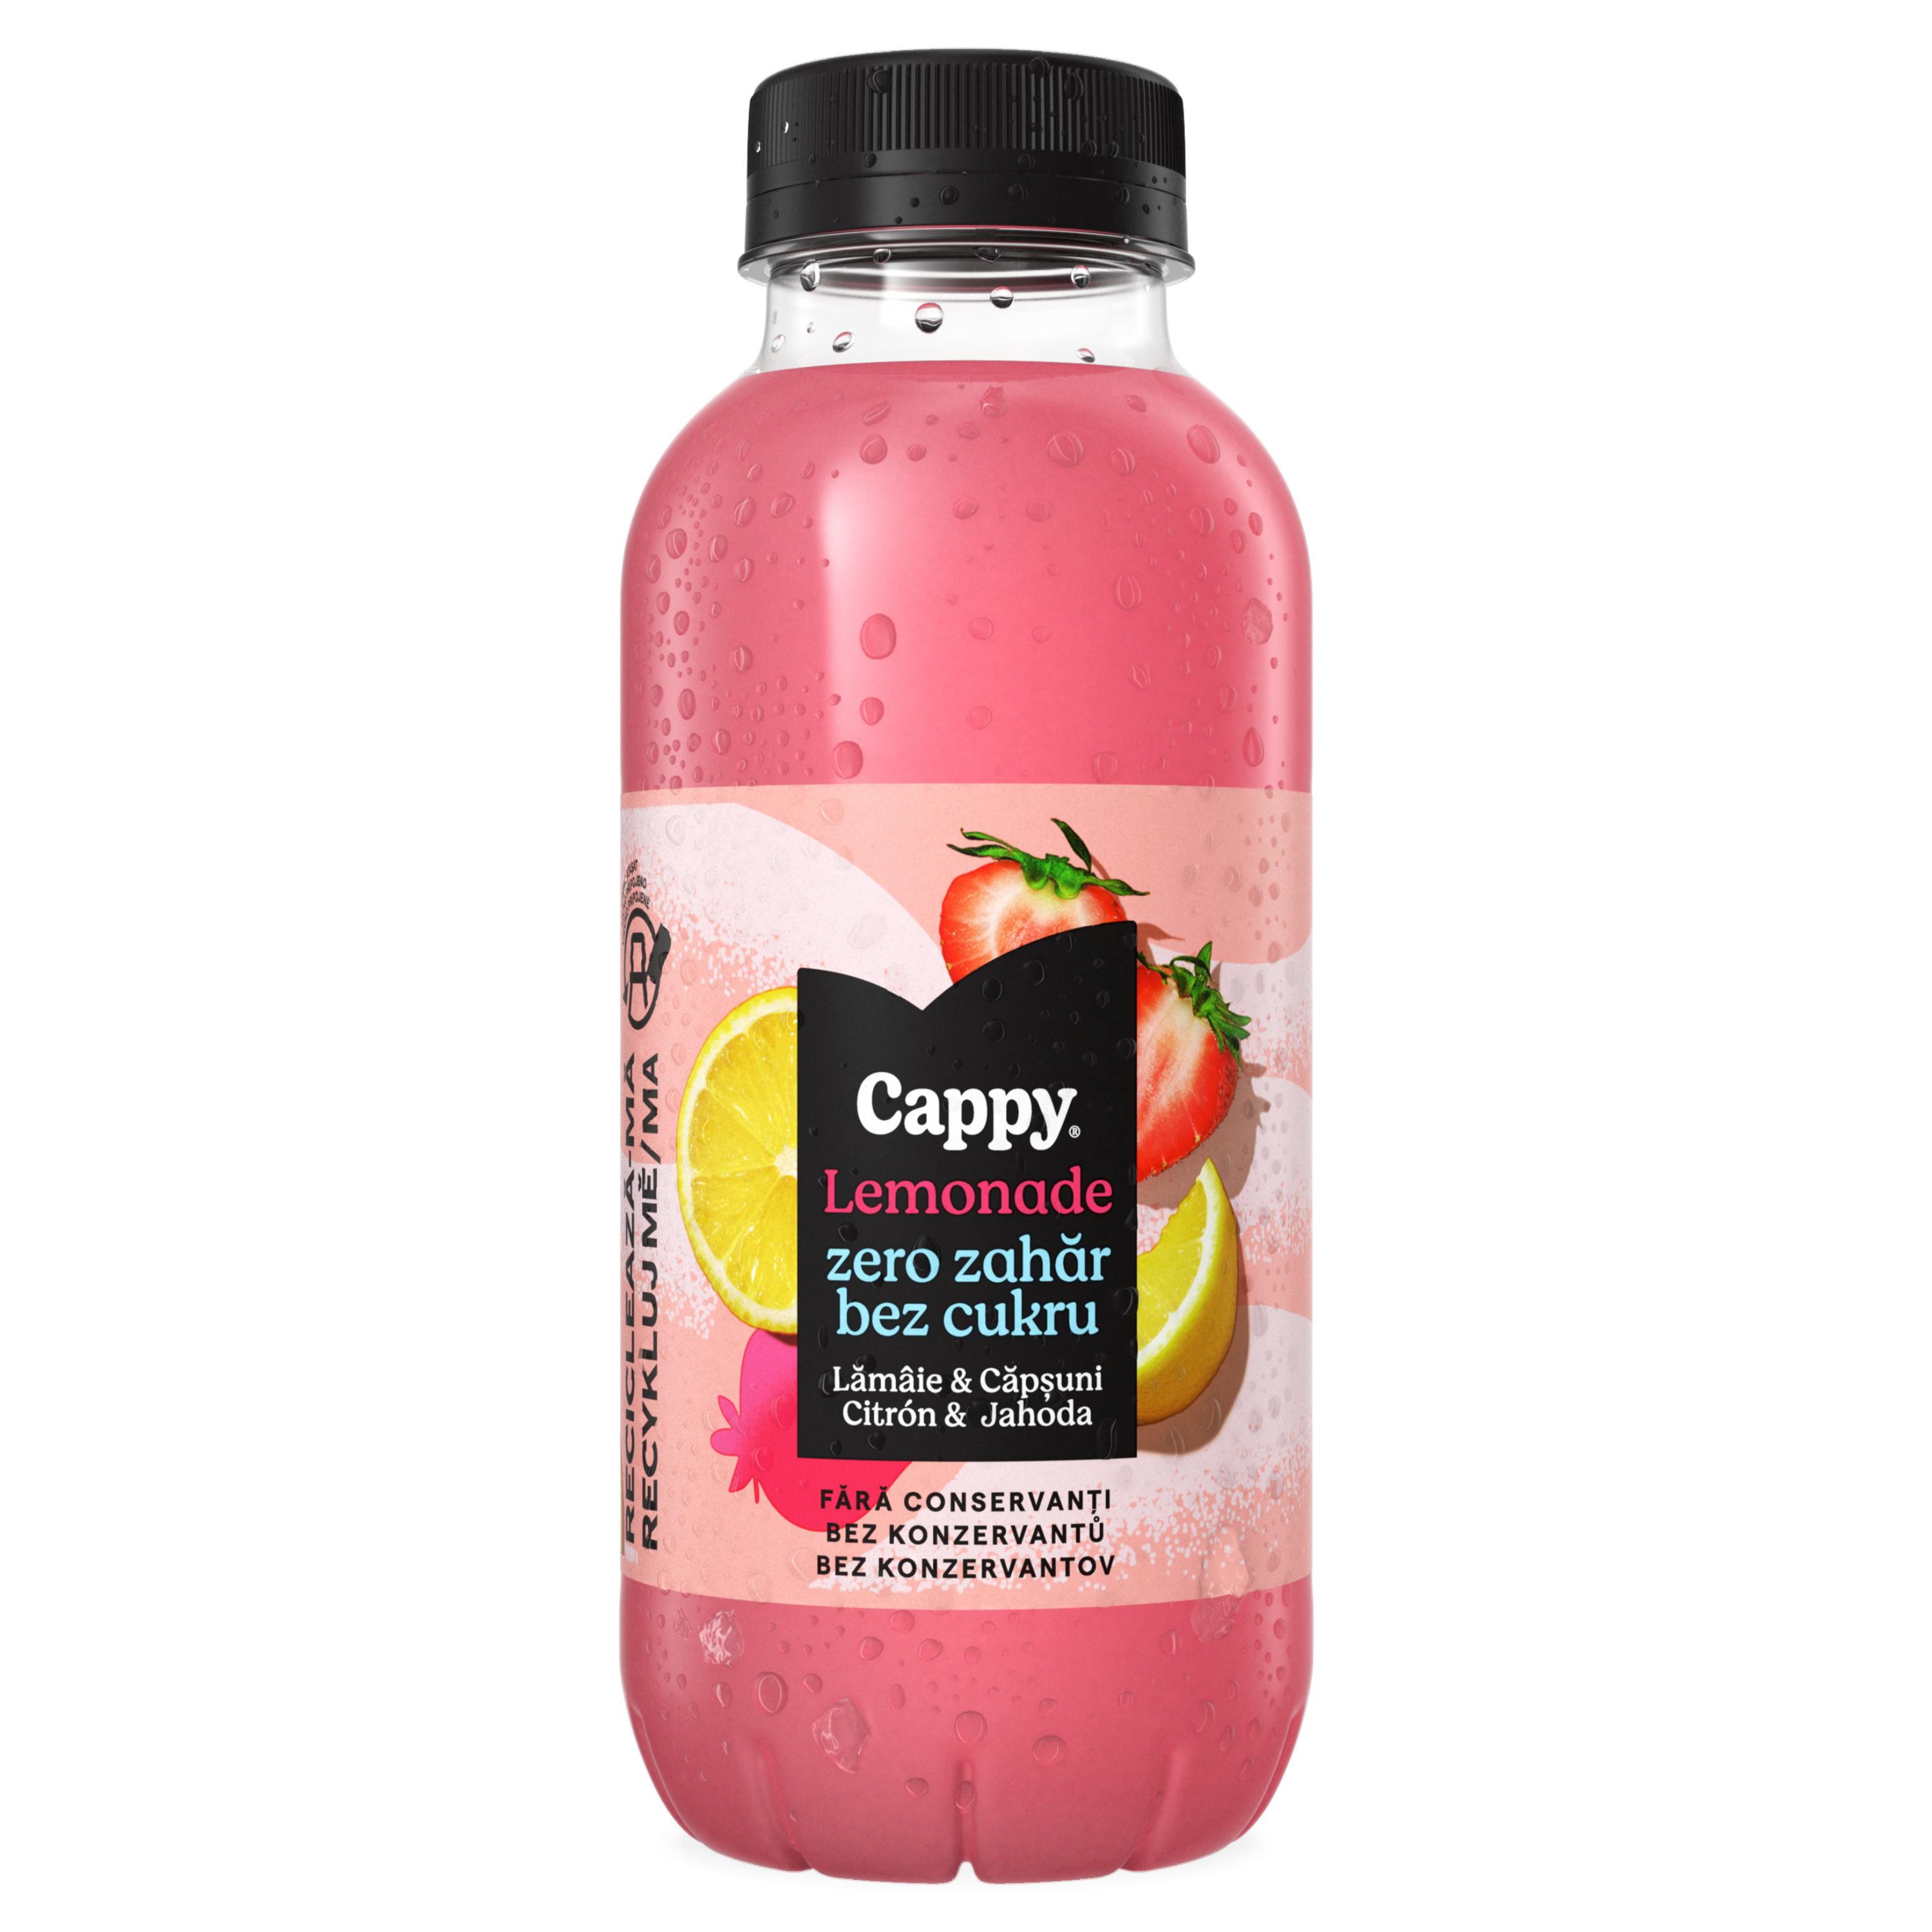 Cappy Lemonade Zero Zahăr - Lămâie & Căpșuni